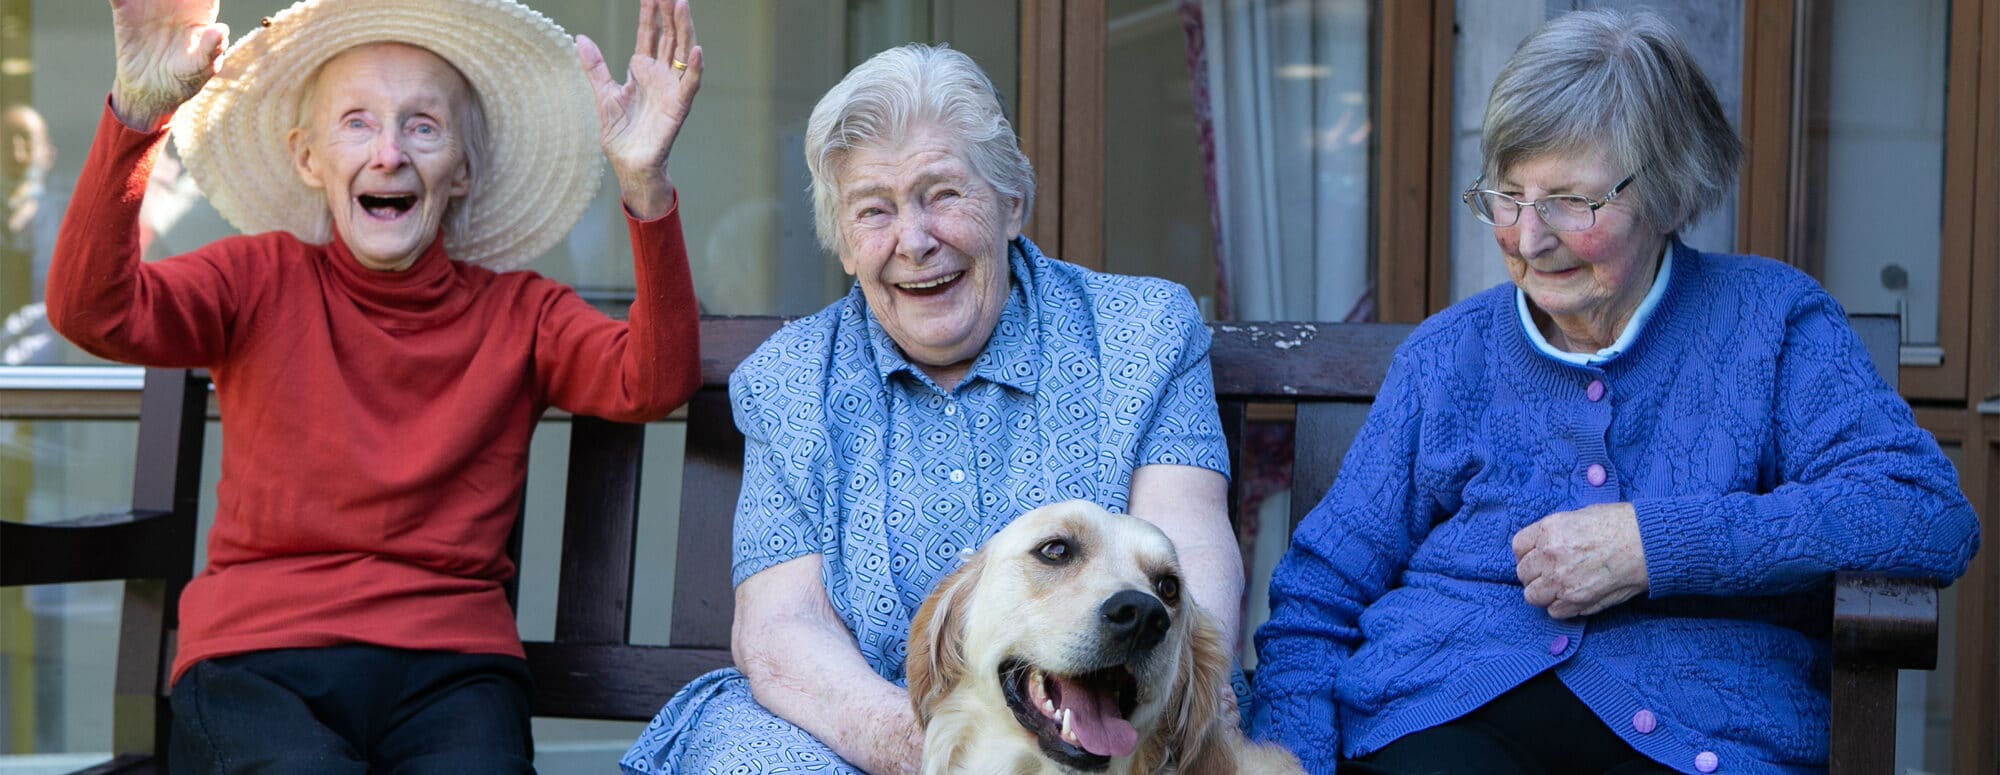 Happy nursing home residents